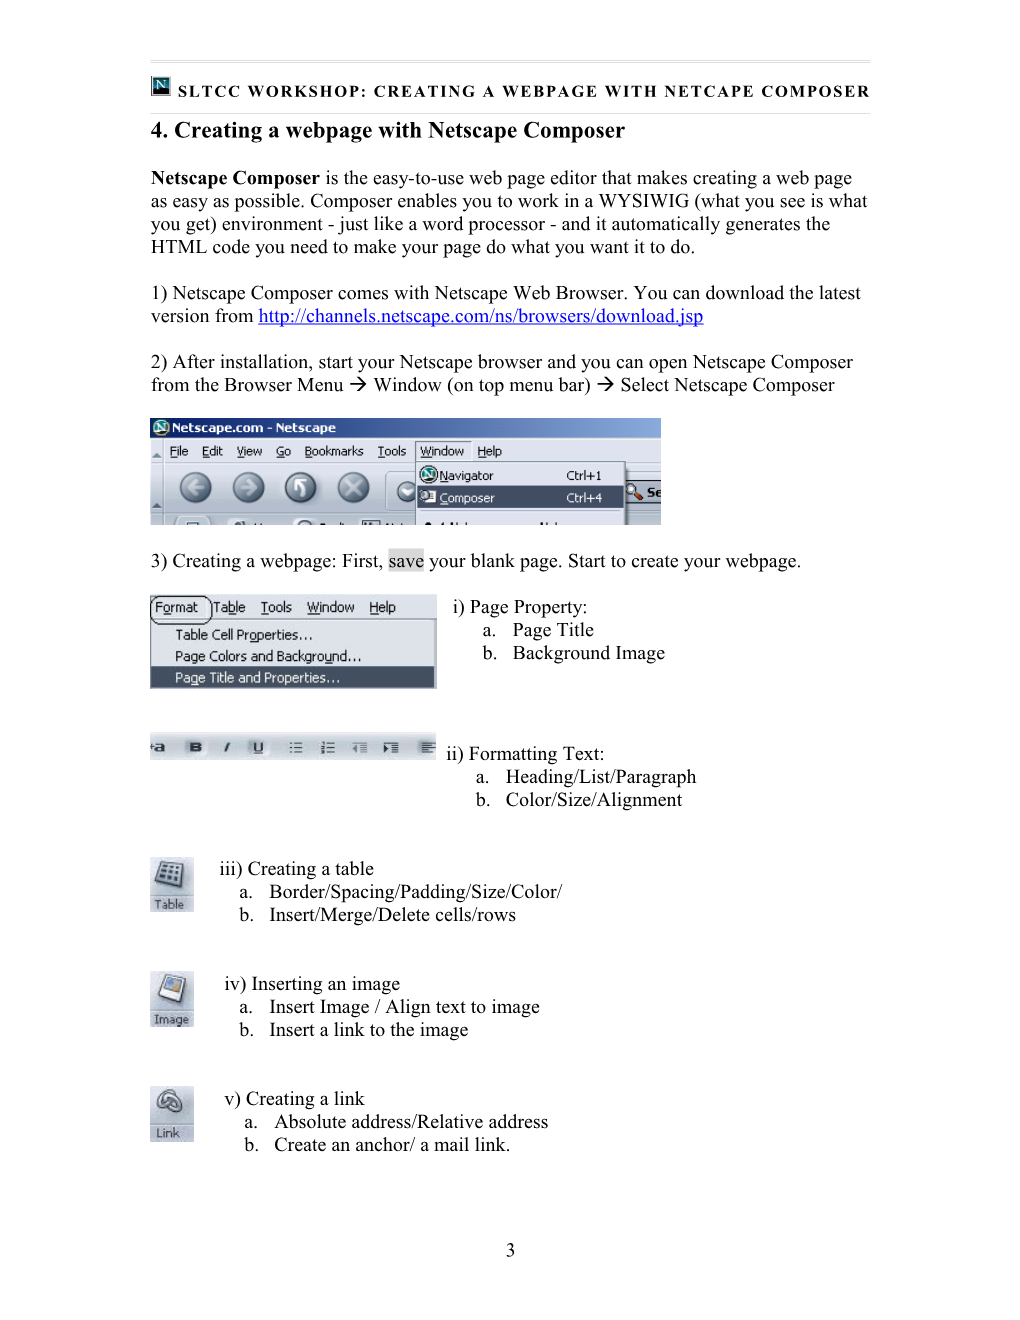 1) Commercial HTML Editors: Dreamweaver MX, Frontpage 2002